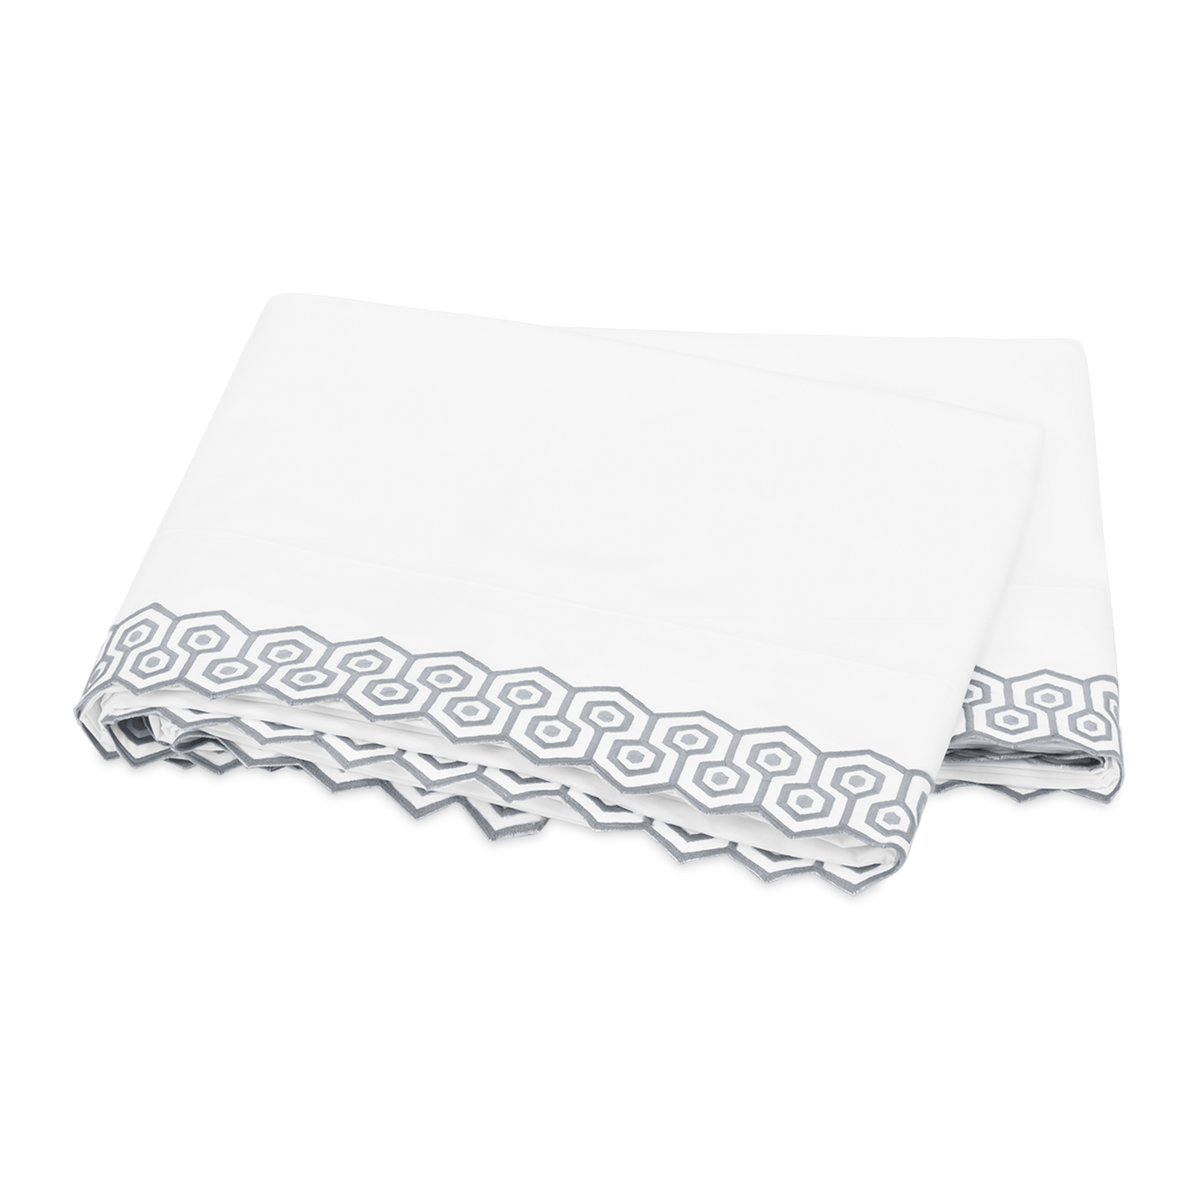 Folded Flat Sheet of Matouk Felix Bedding in Silver Color